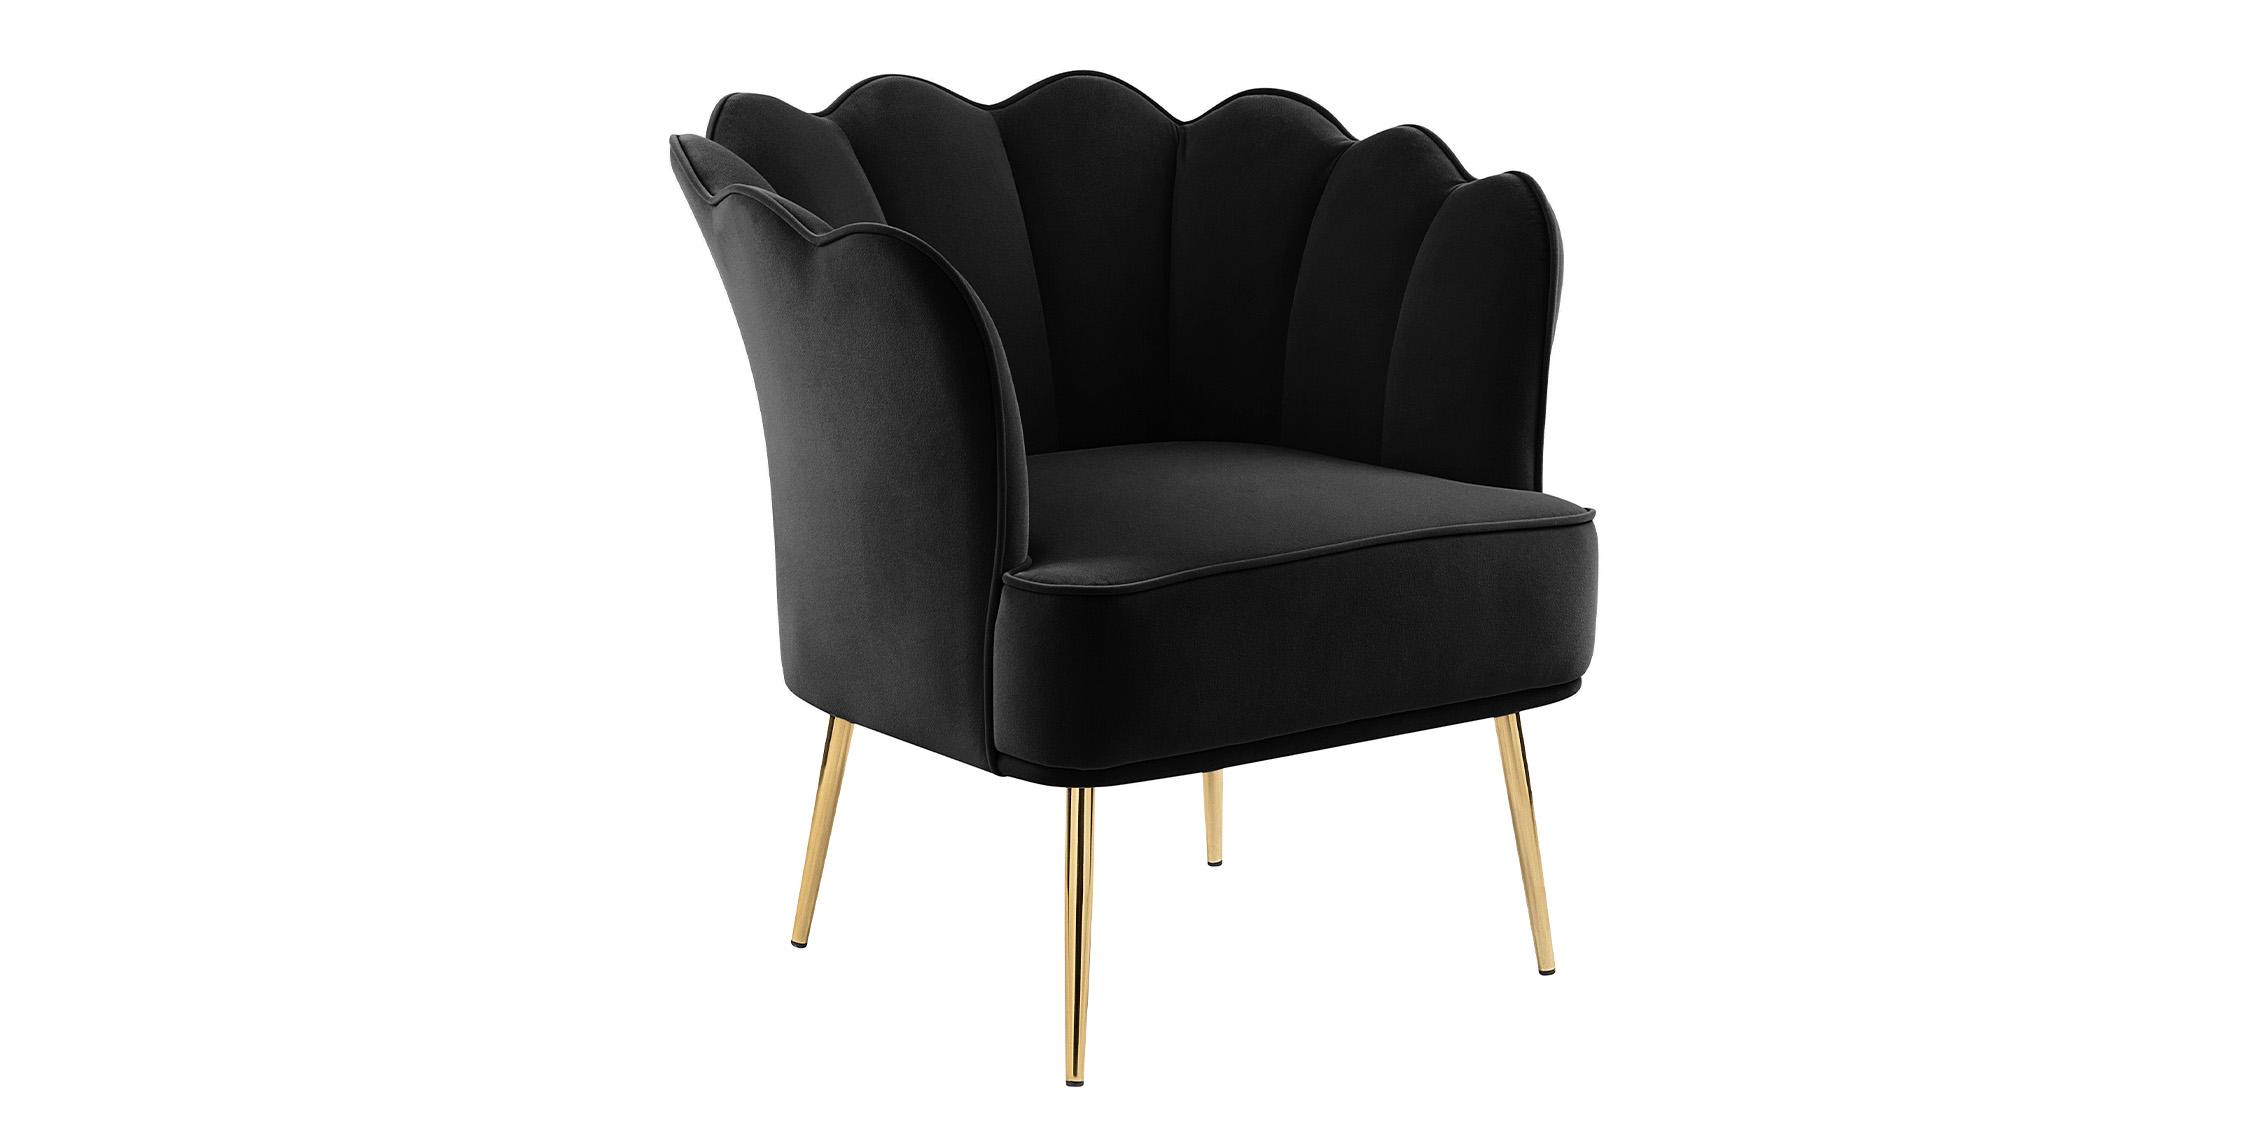 Contemporary, Modern Accent Chair JESTER 516Black 516Black in Gold, Black Velvet